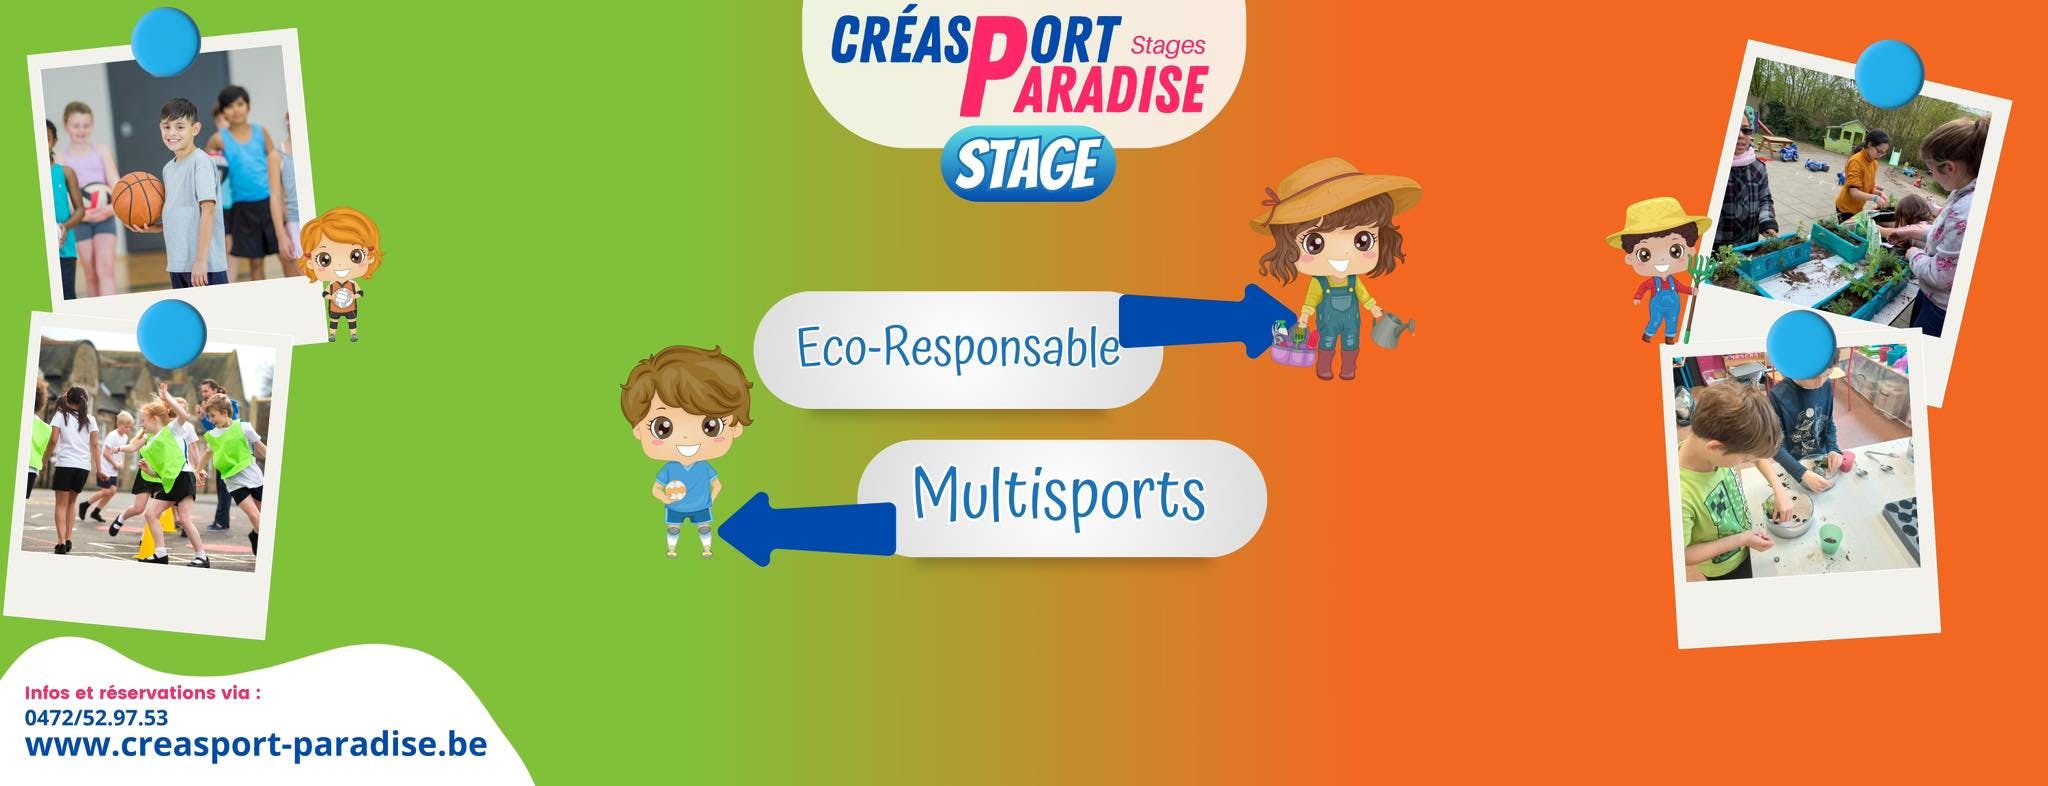 Eco-Responsable - Multisports